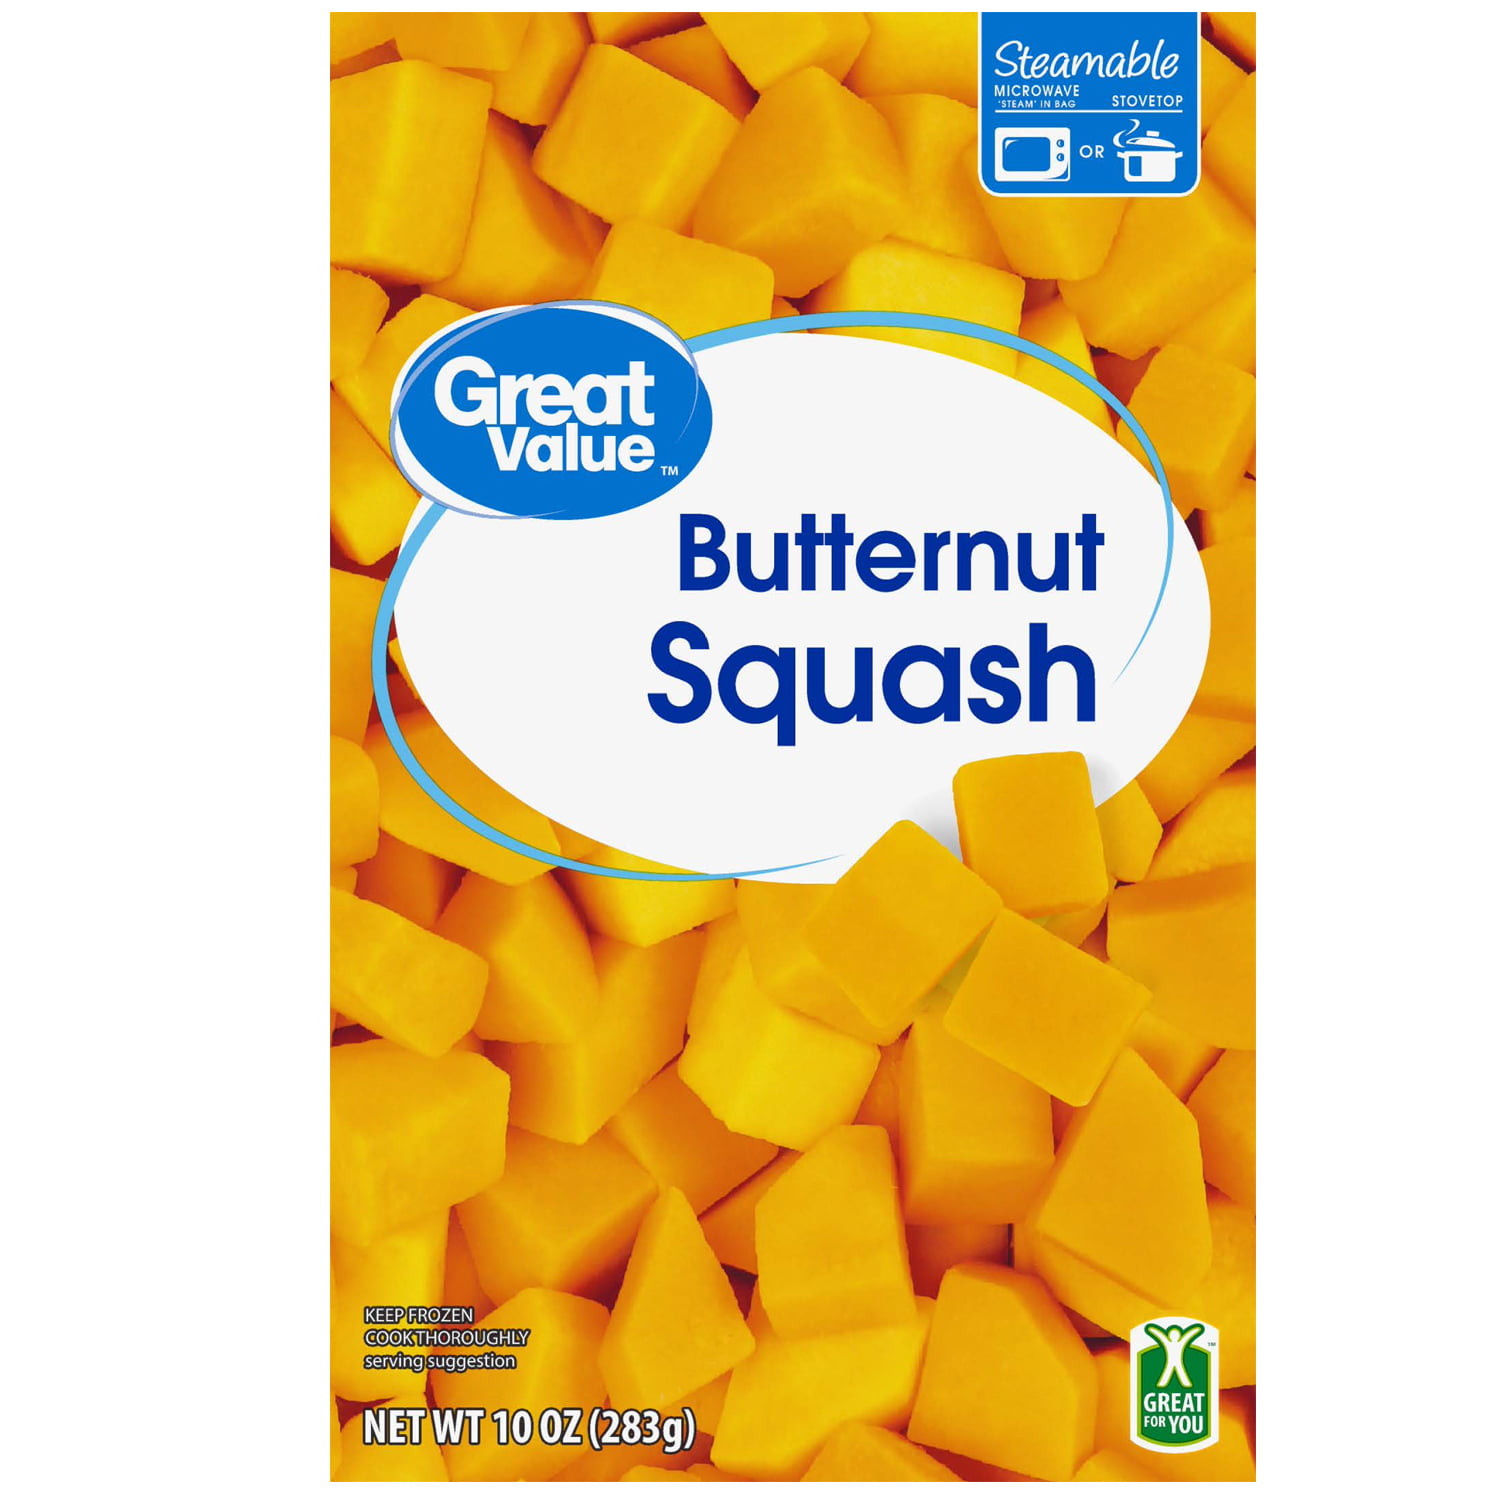 Great Value Steamable Butternut Squash, Frozen, 10 oz